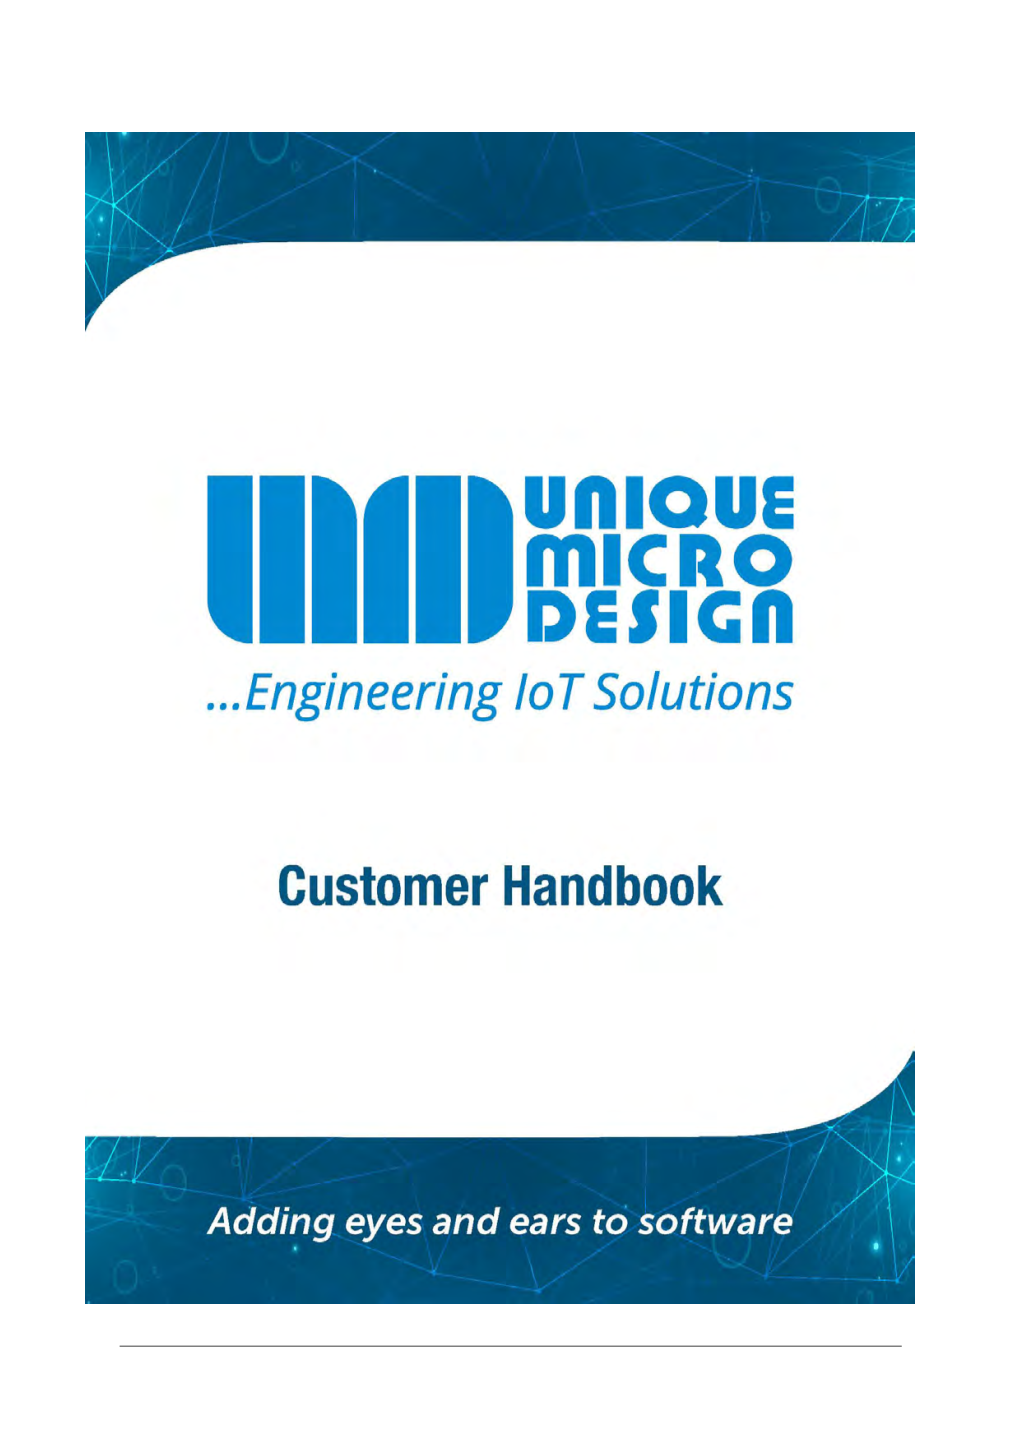 UMD Customer Handbook (HB-201)